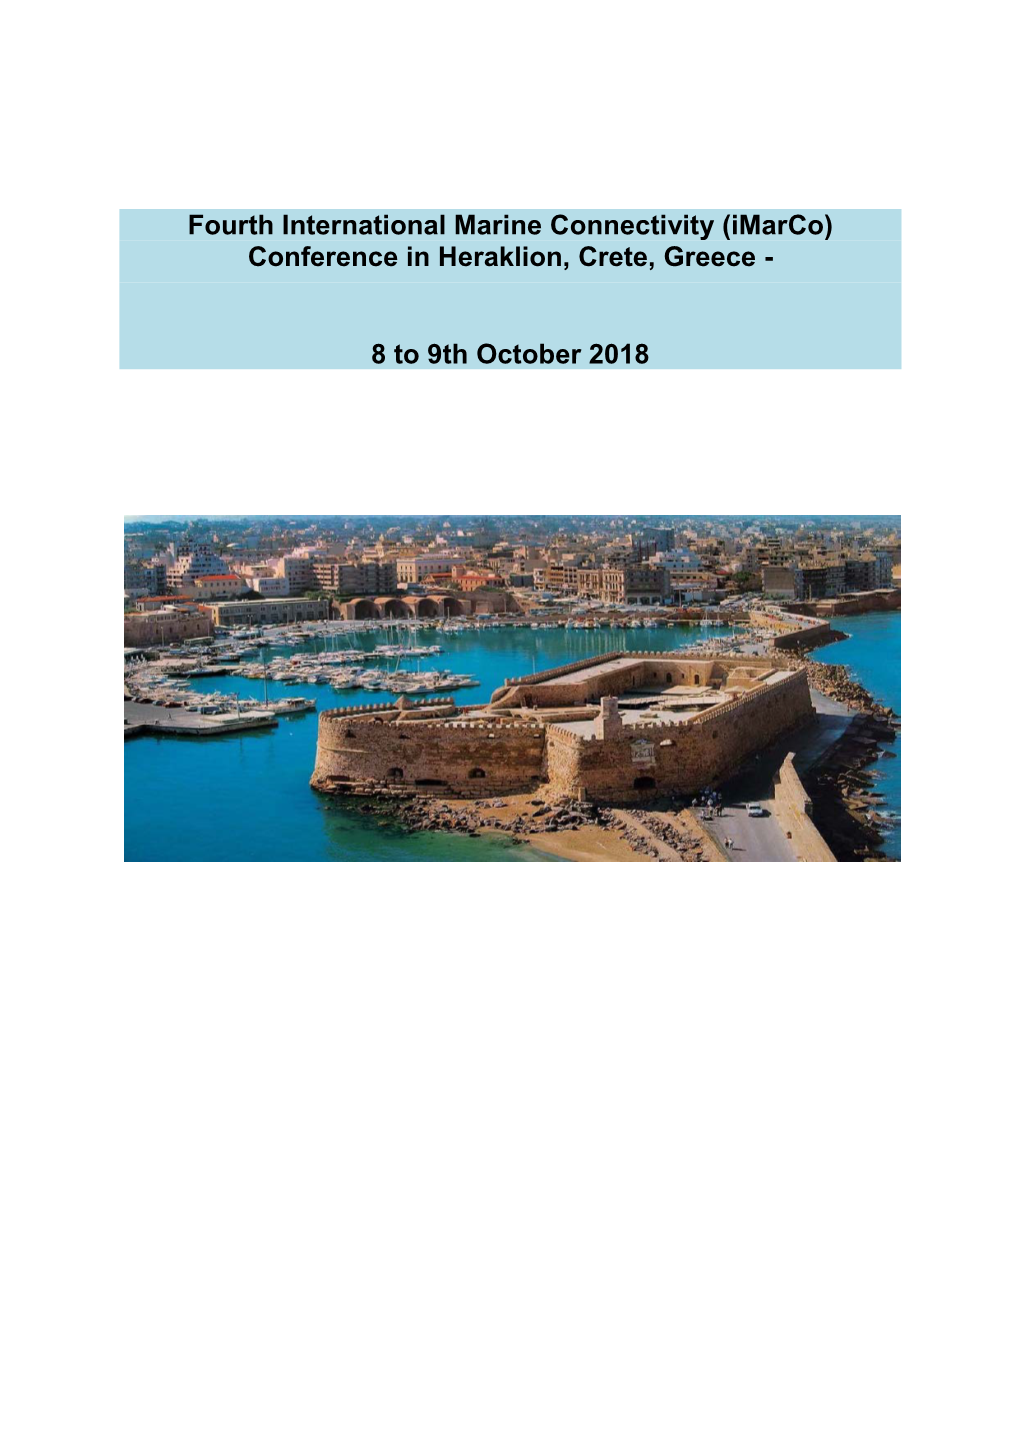 Fourth International Marine Connectivity (Imarco) Conference in Heraklion, Crete, Greece